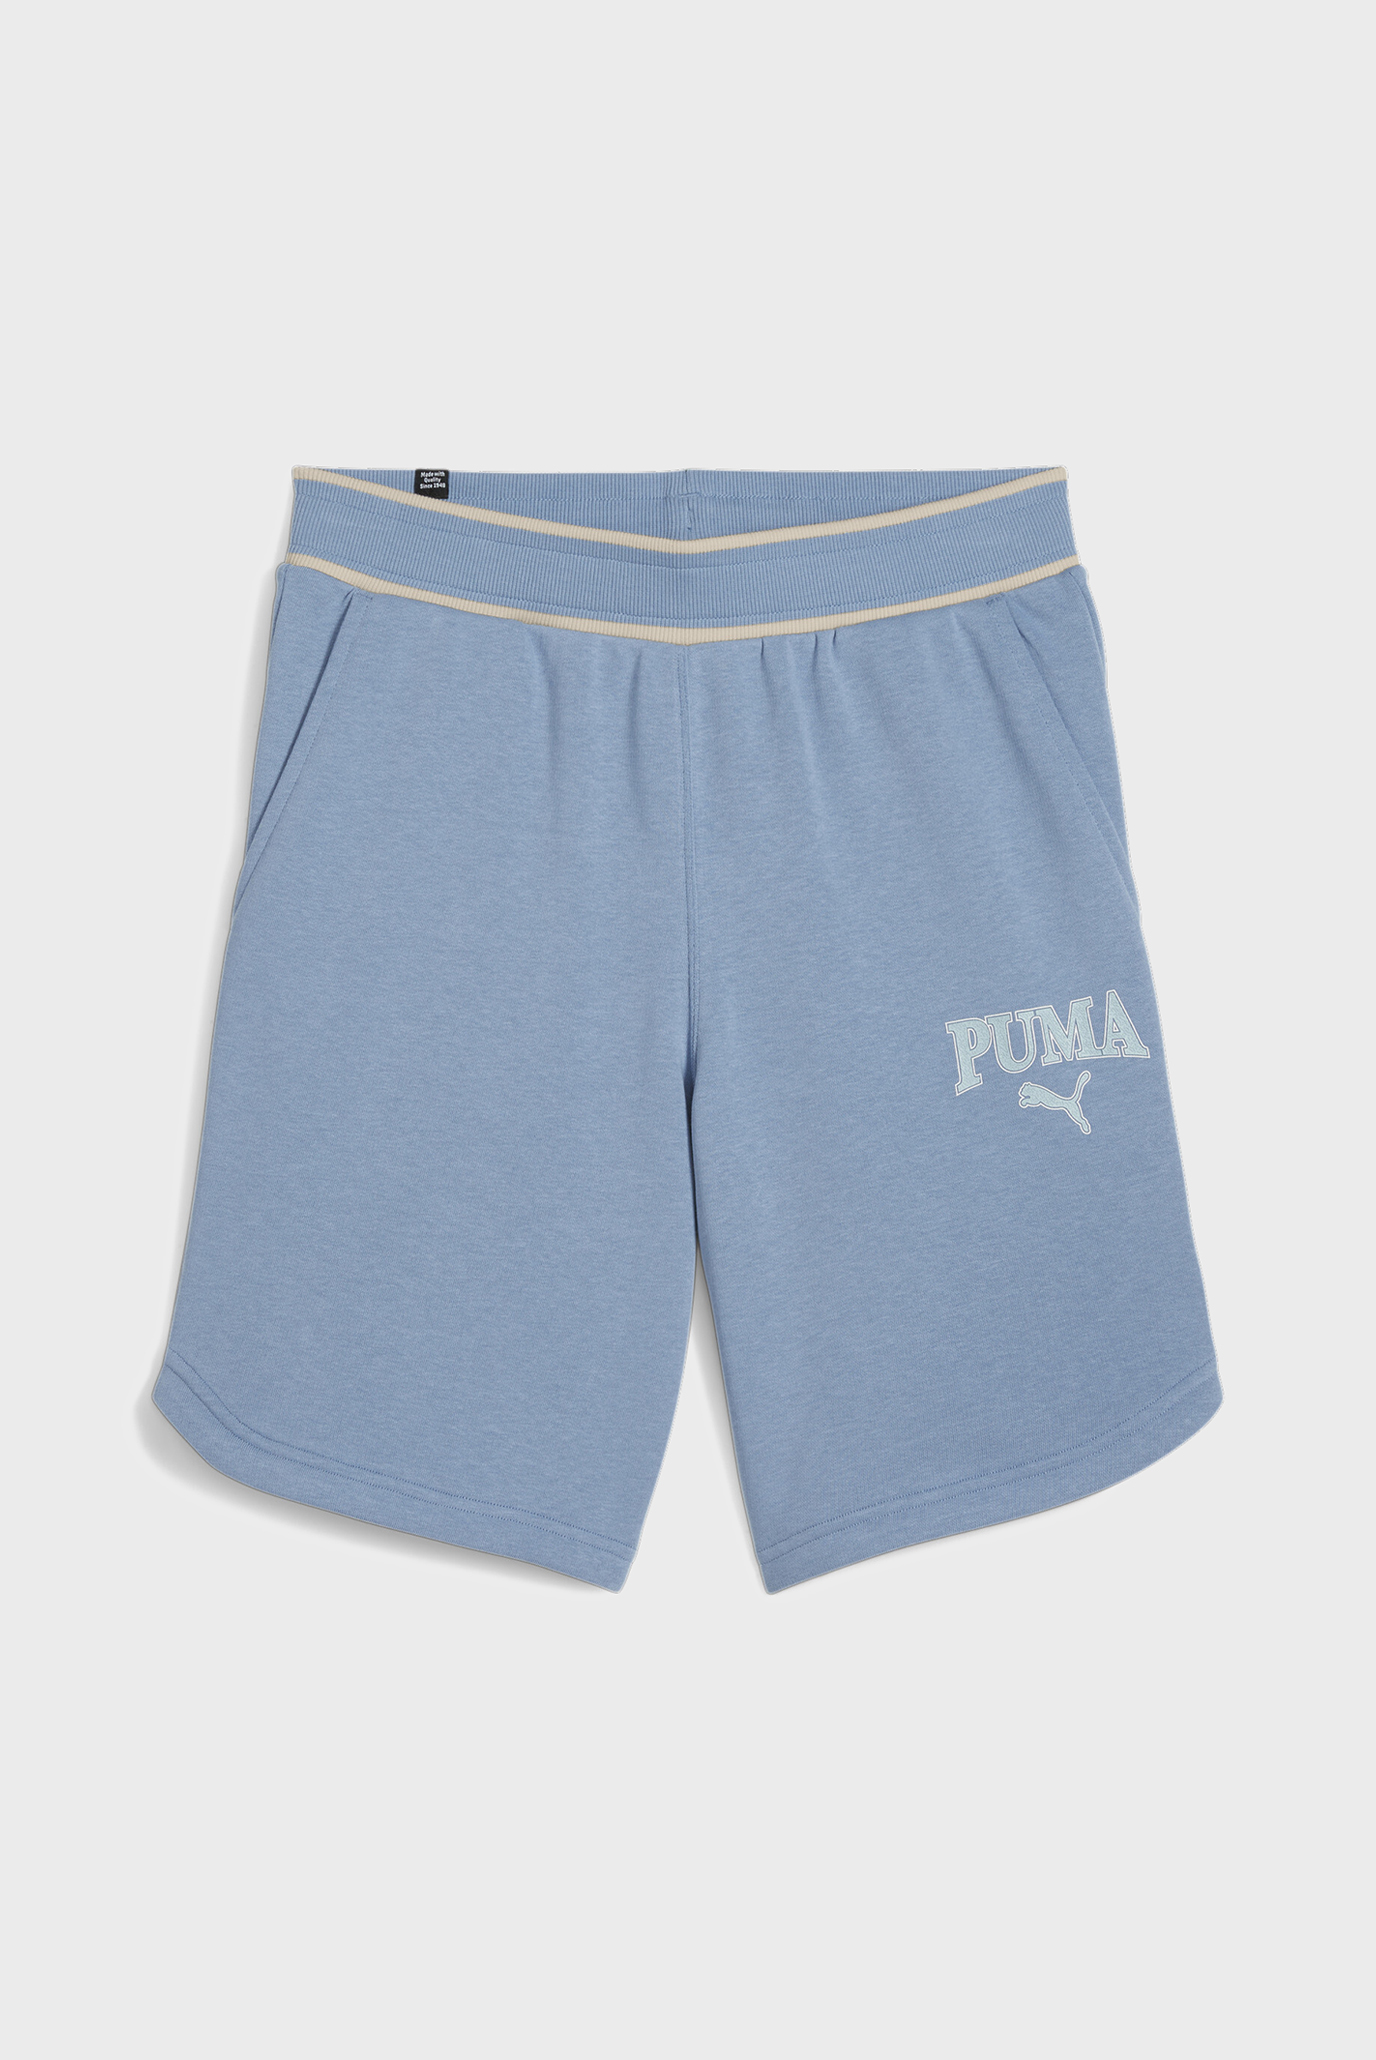 Мужские голубые шорты PUMA SQUAD Shorts 1